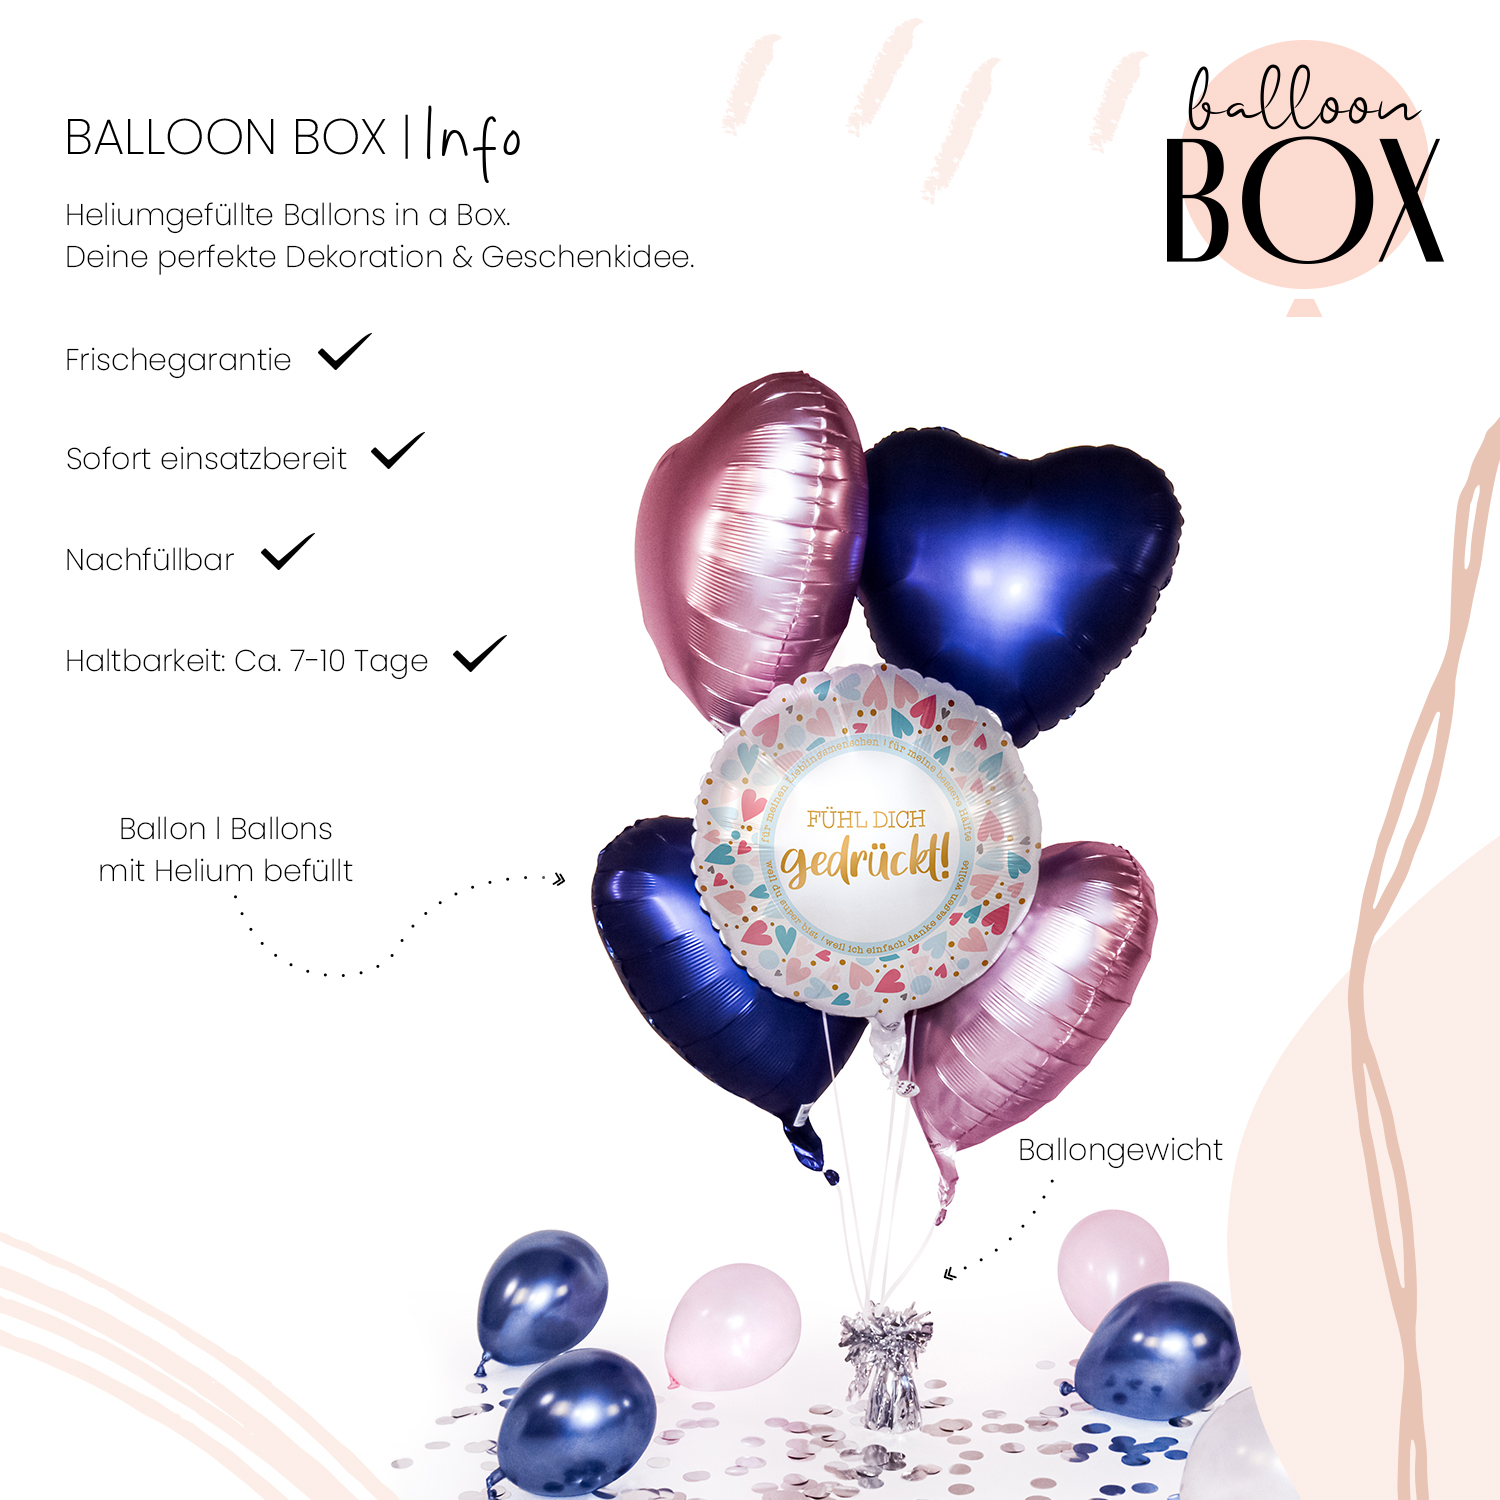 Heliumballon in a Box - Fühl dich gedrückt